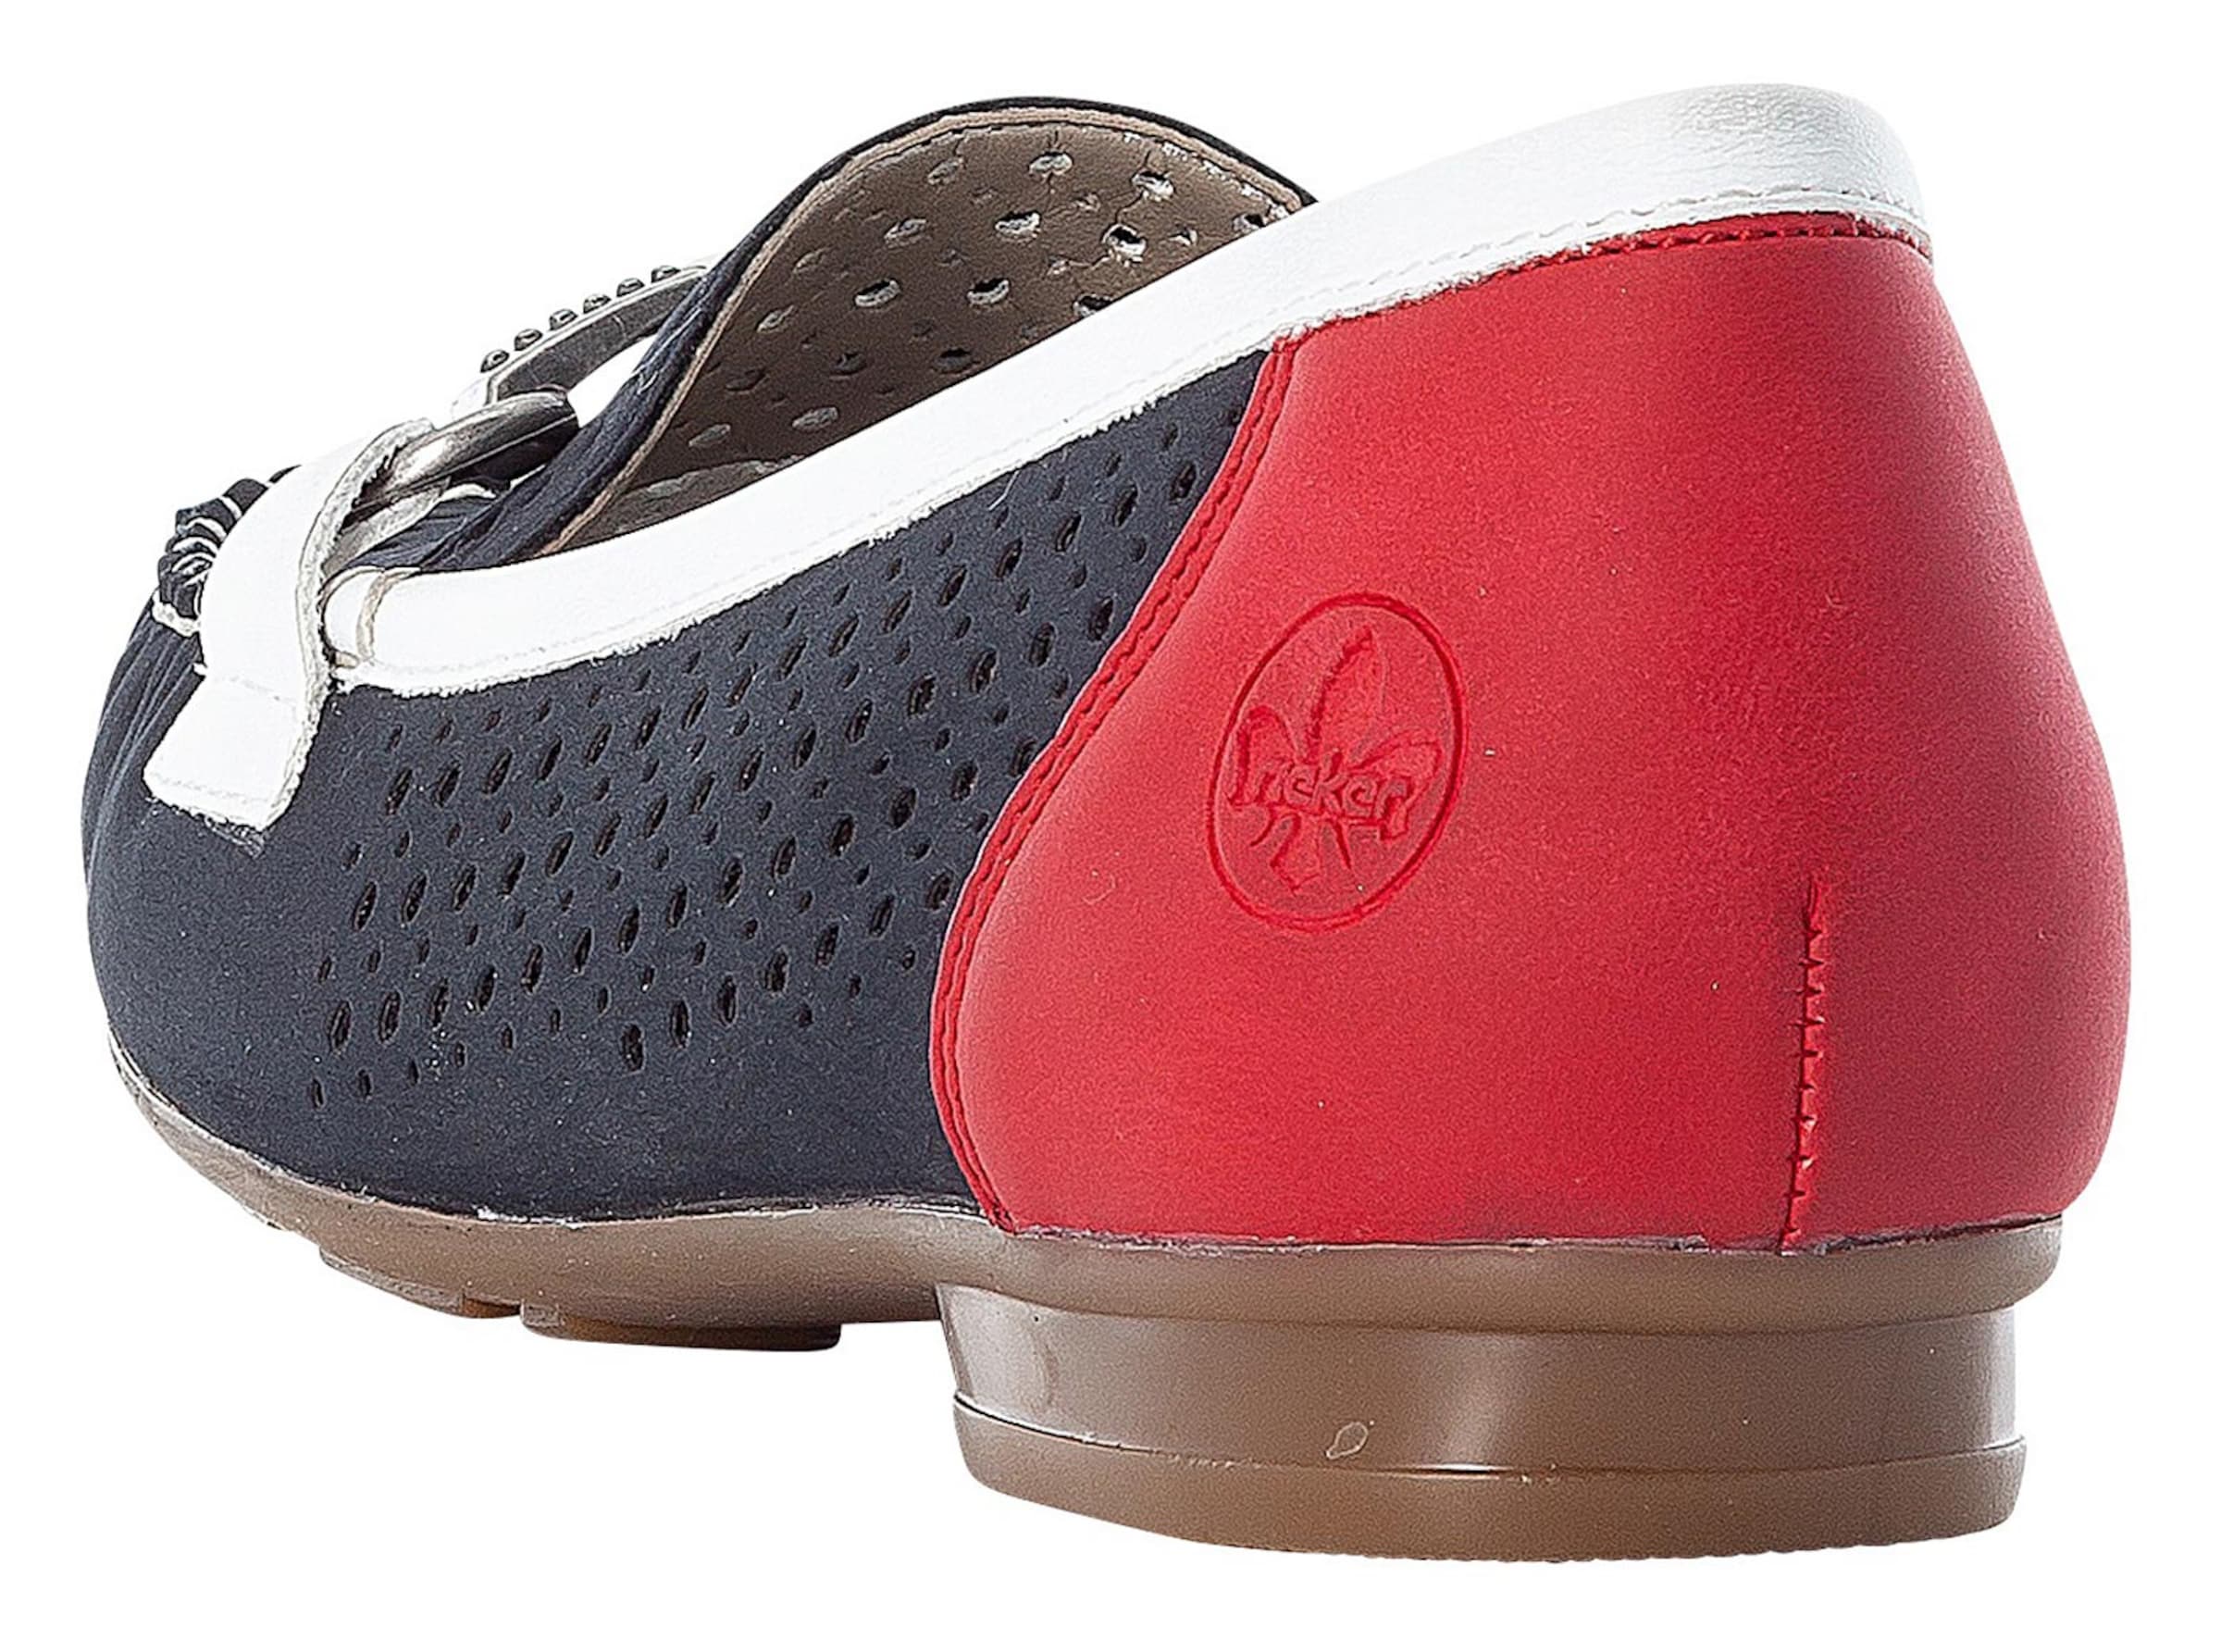 Schuhe Mokassins & Slippers Rieker Slipper in dunkelblau-rot-weiß 